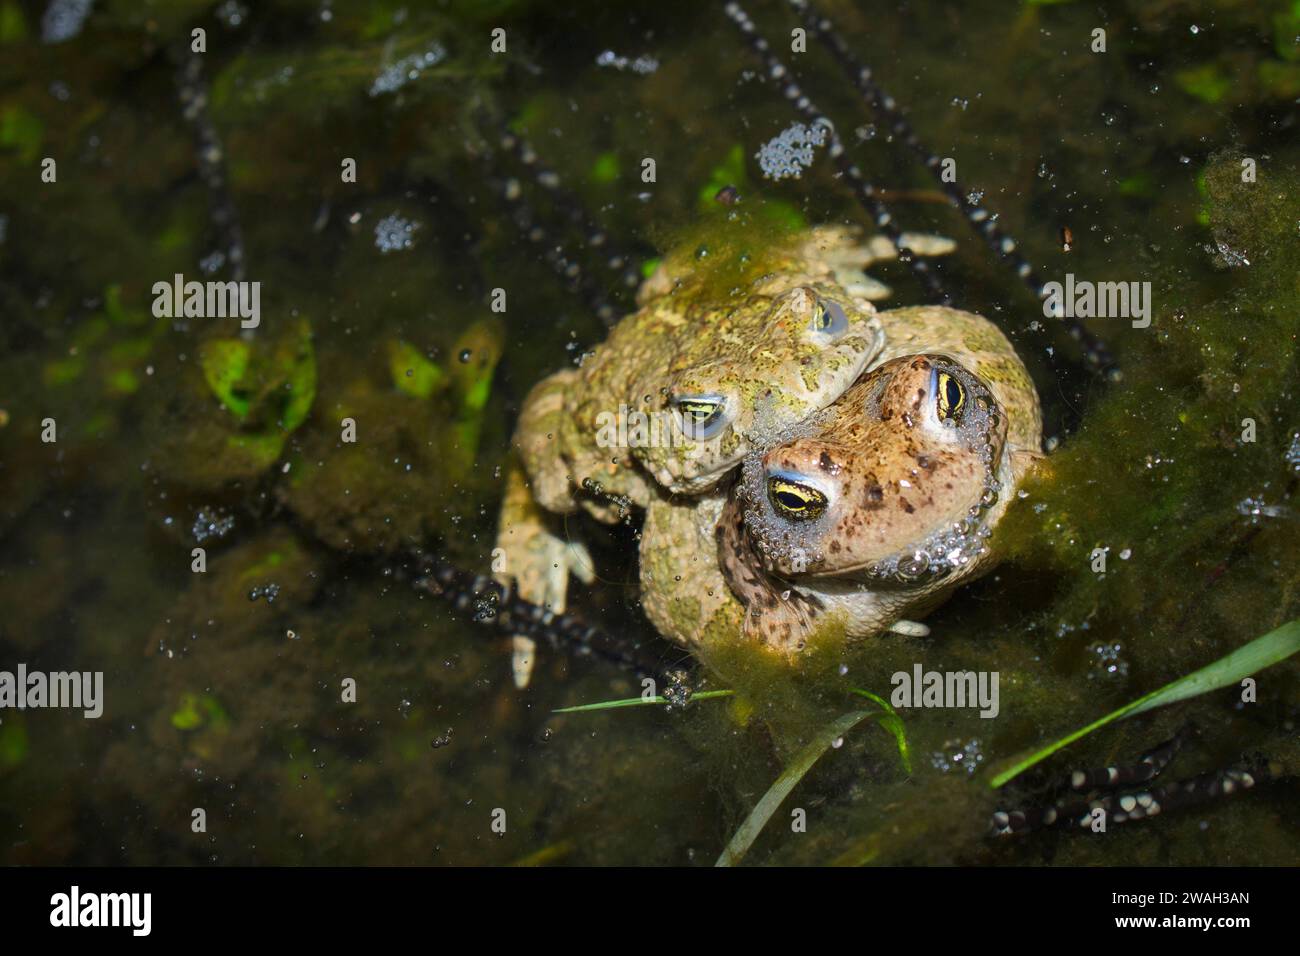 natterjack toad, natterjack, British toad (Bufo calamita, Epidalea calamita), pair of natterjack toads in amplexus in the spawning waters, France, Bri Stock Photo